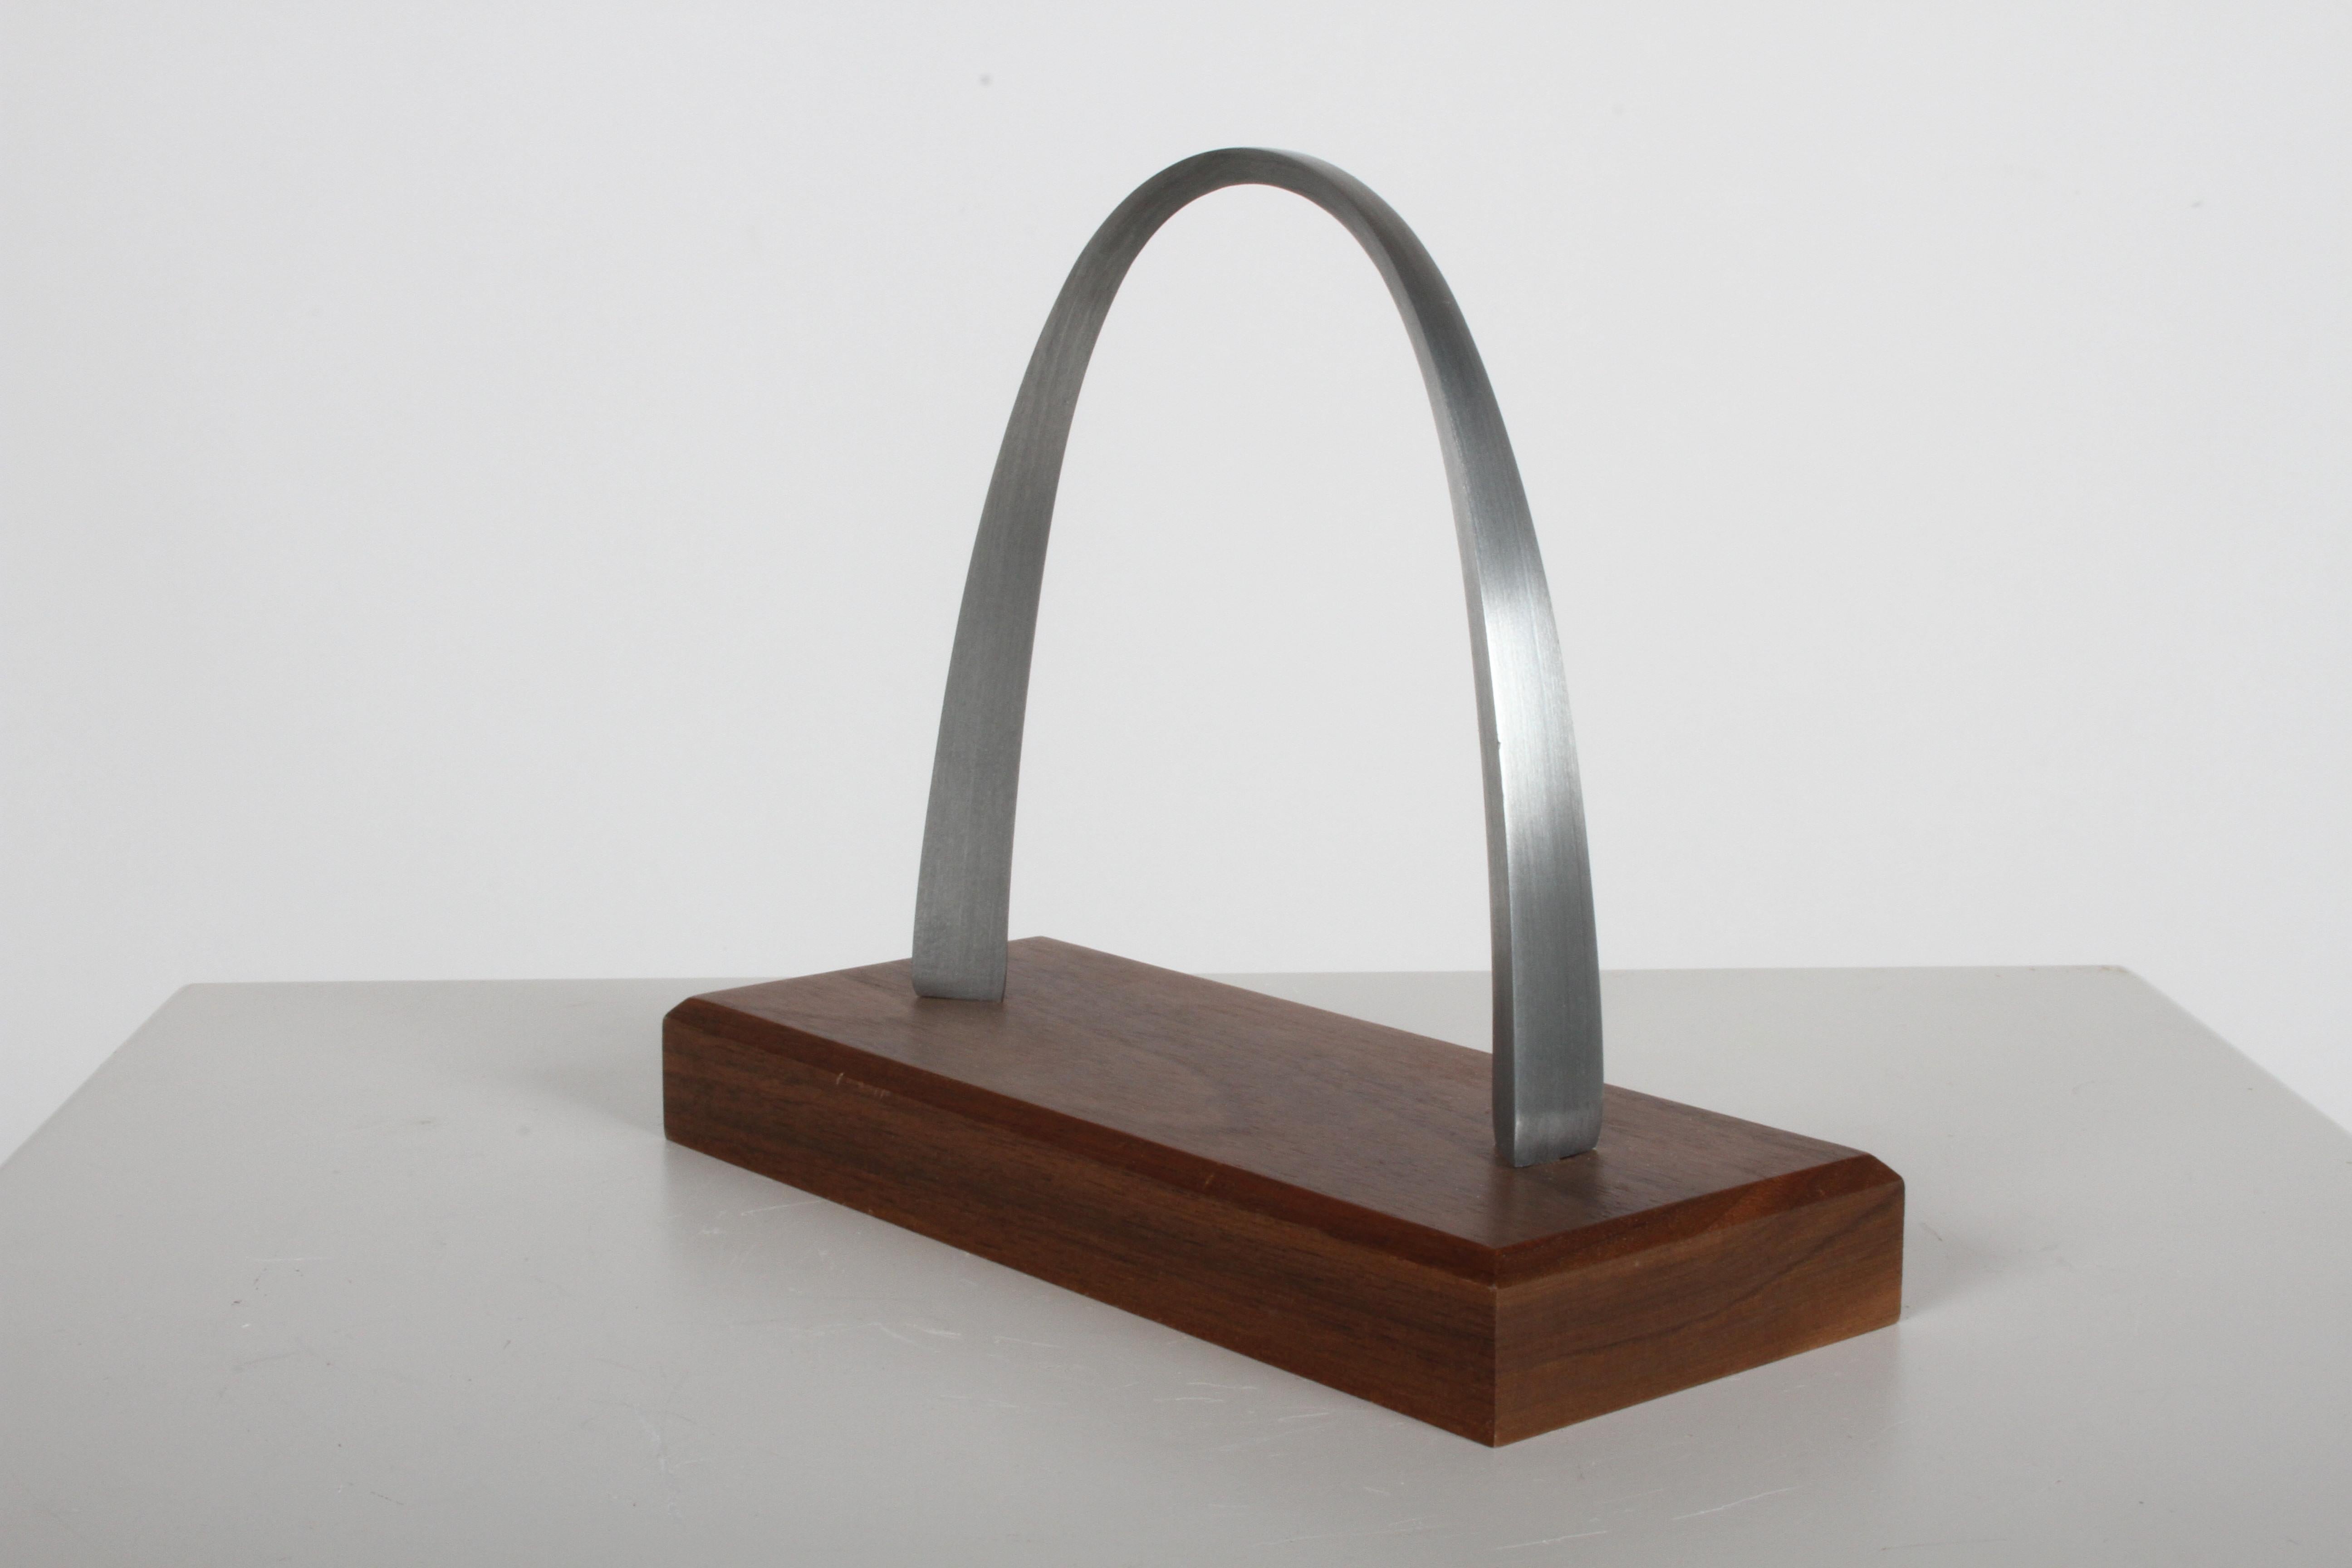 American St. Louis Gateway Arch Stainless Steel Sculpture designed by Eero Saarinen